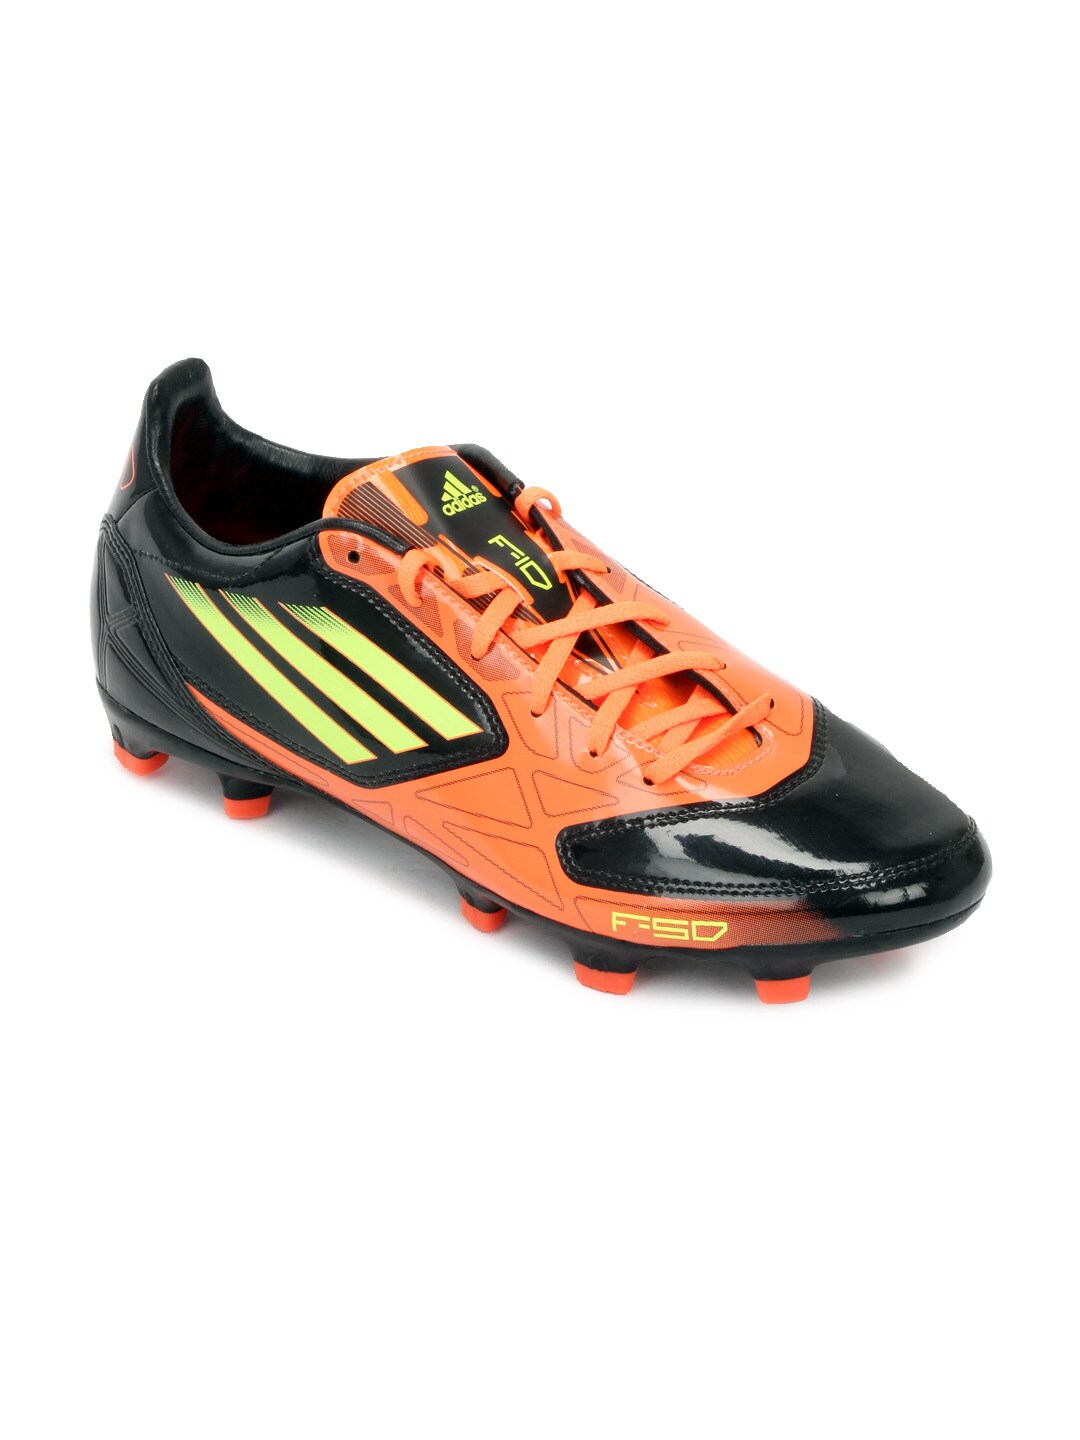 ADIDAS Men Orange F10 Sports Shoes